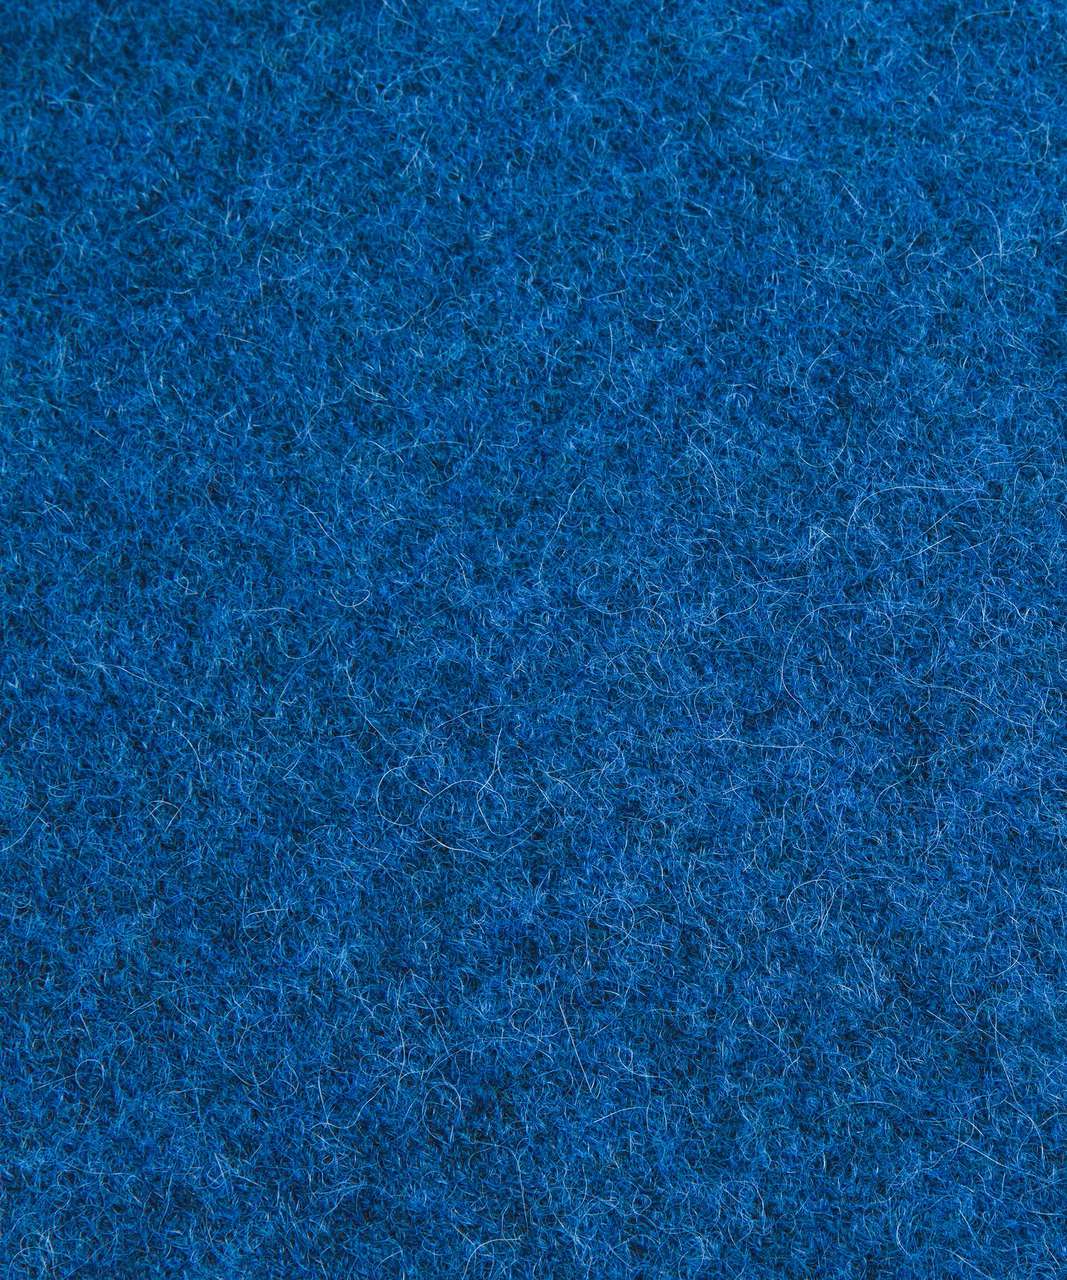 Lululemon Alpaca Wool-Blend Knit Bomber Jacket - Heathered Blazer Blue